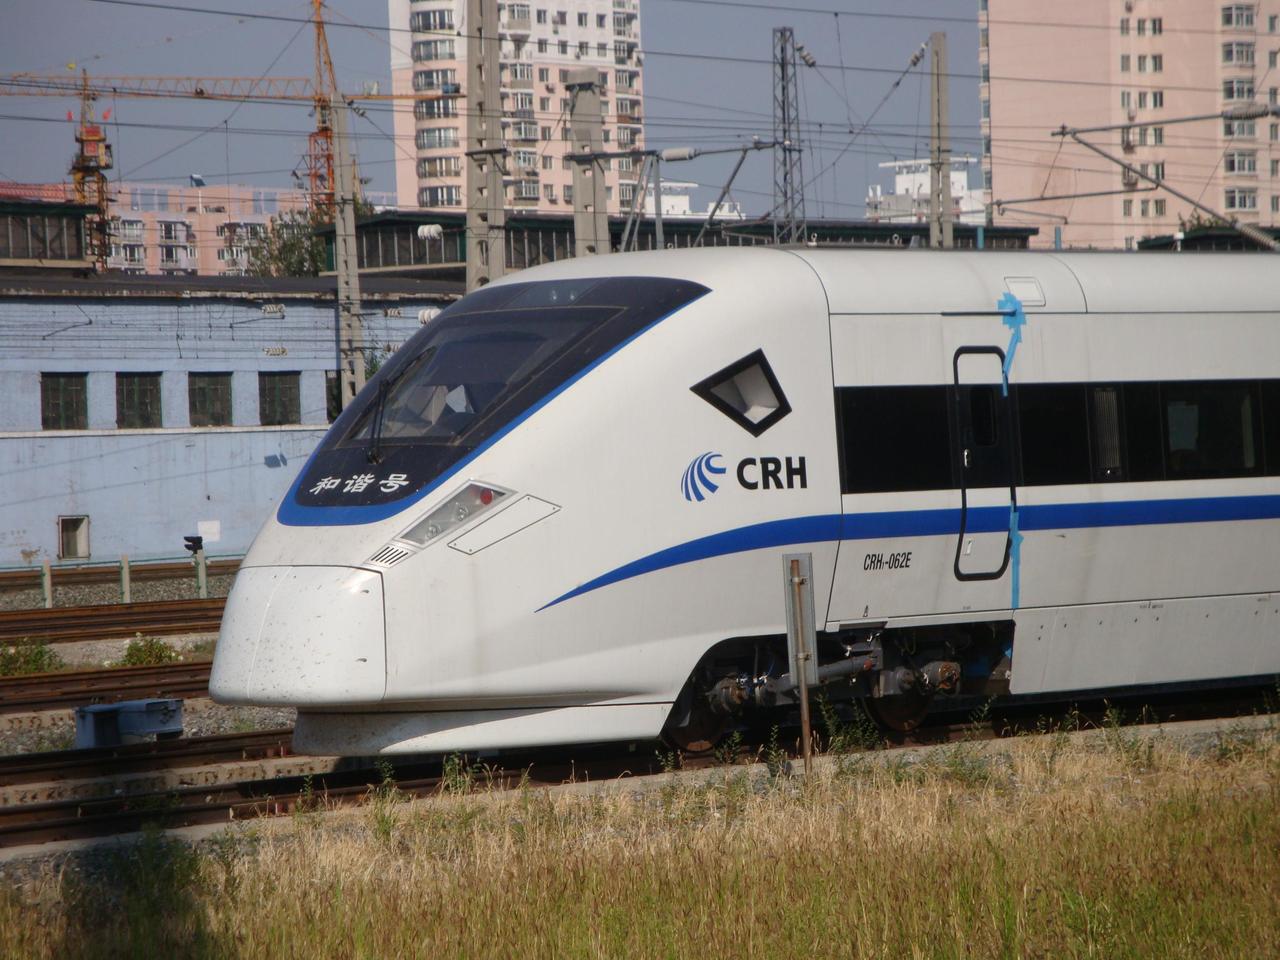 CRH动车组的结构是怎样的，和普通列车的区别在哪里？普通列车的普快、特快、直达在车体结构上又有什么不同？ - 知乎